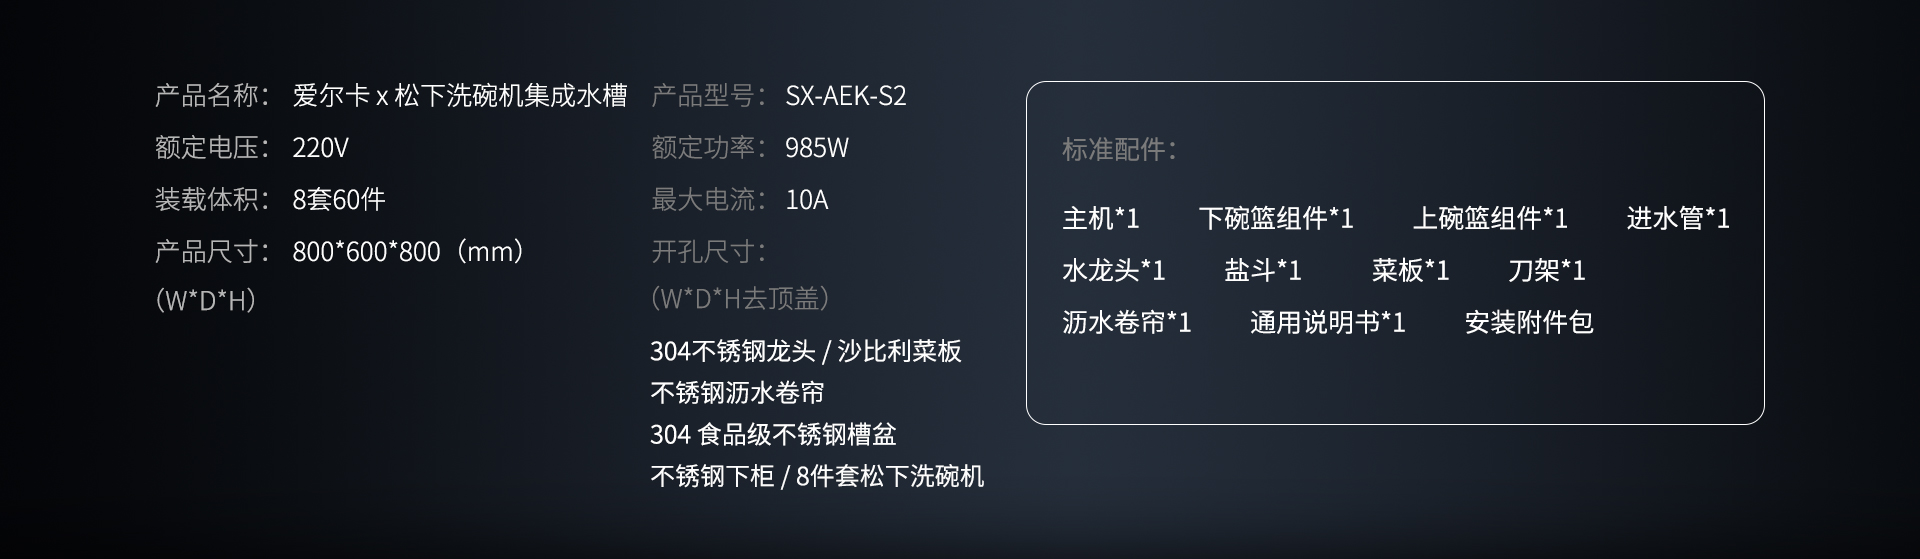 SX-AEK-S12.jpg